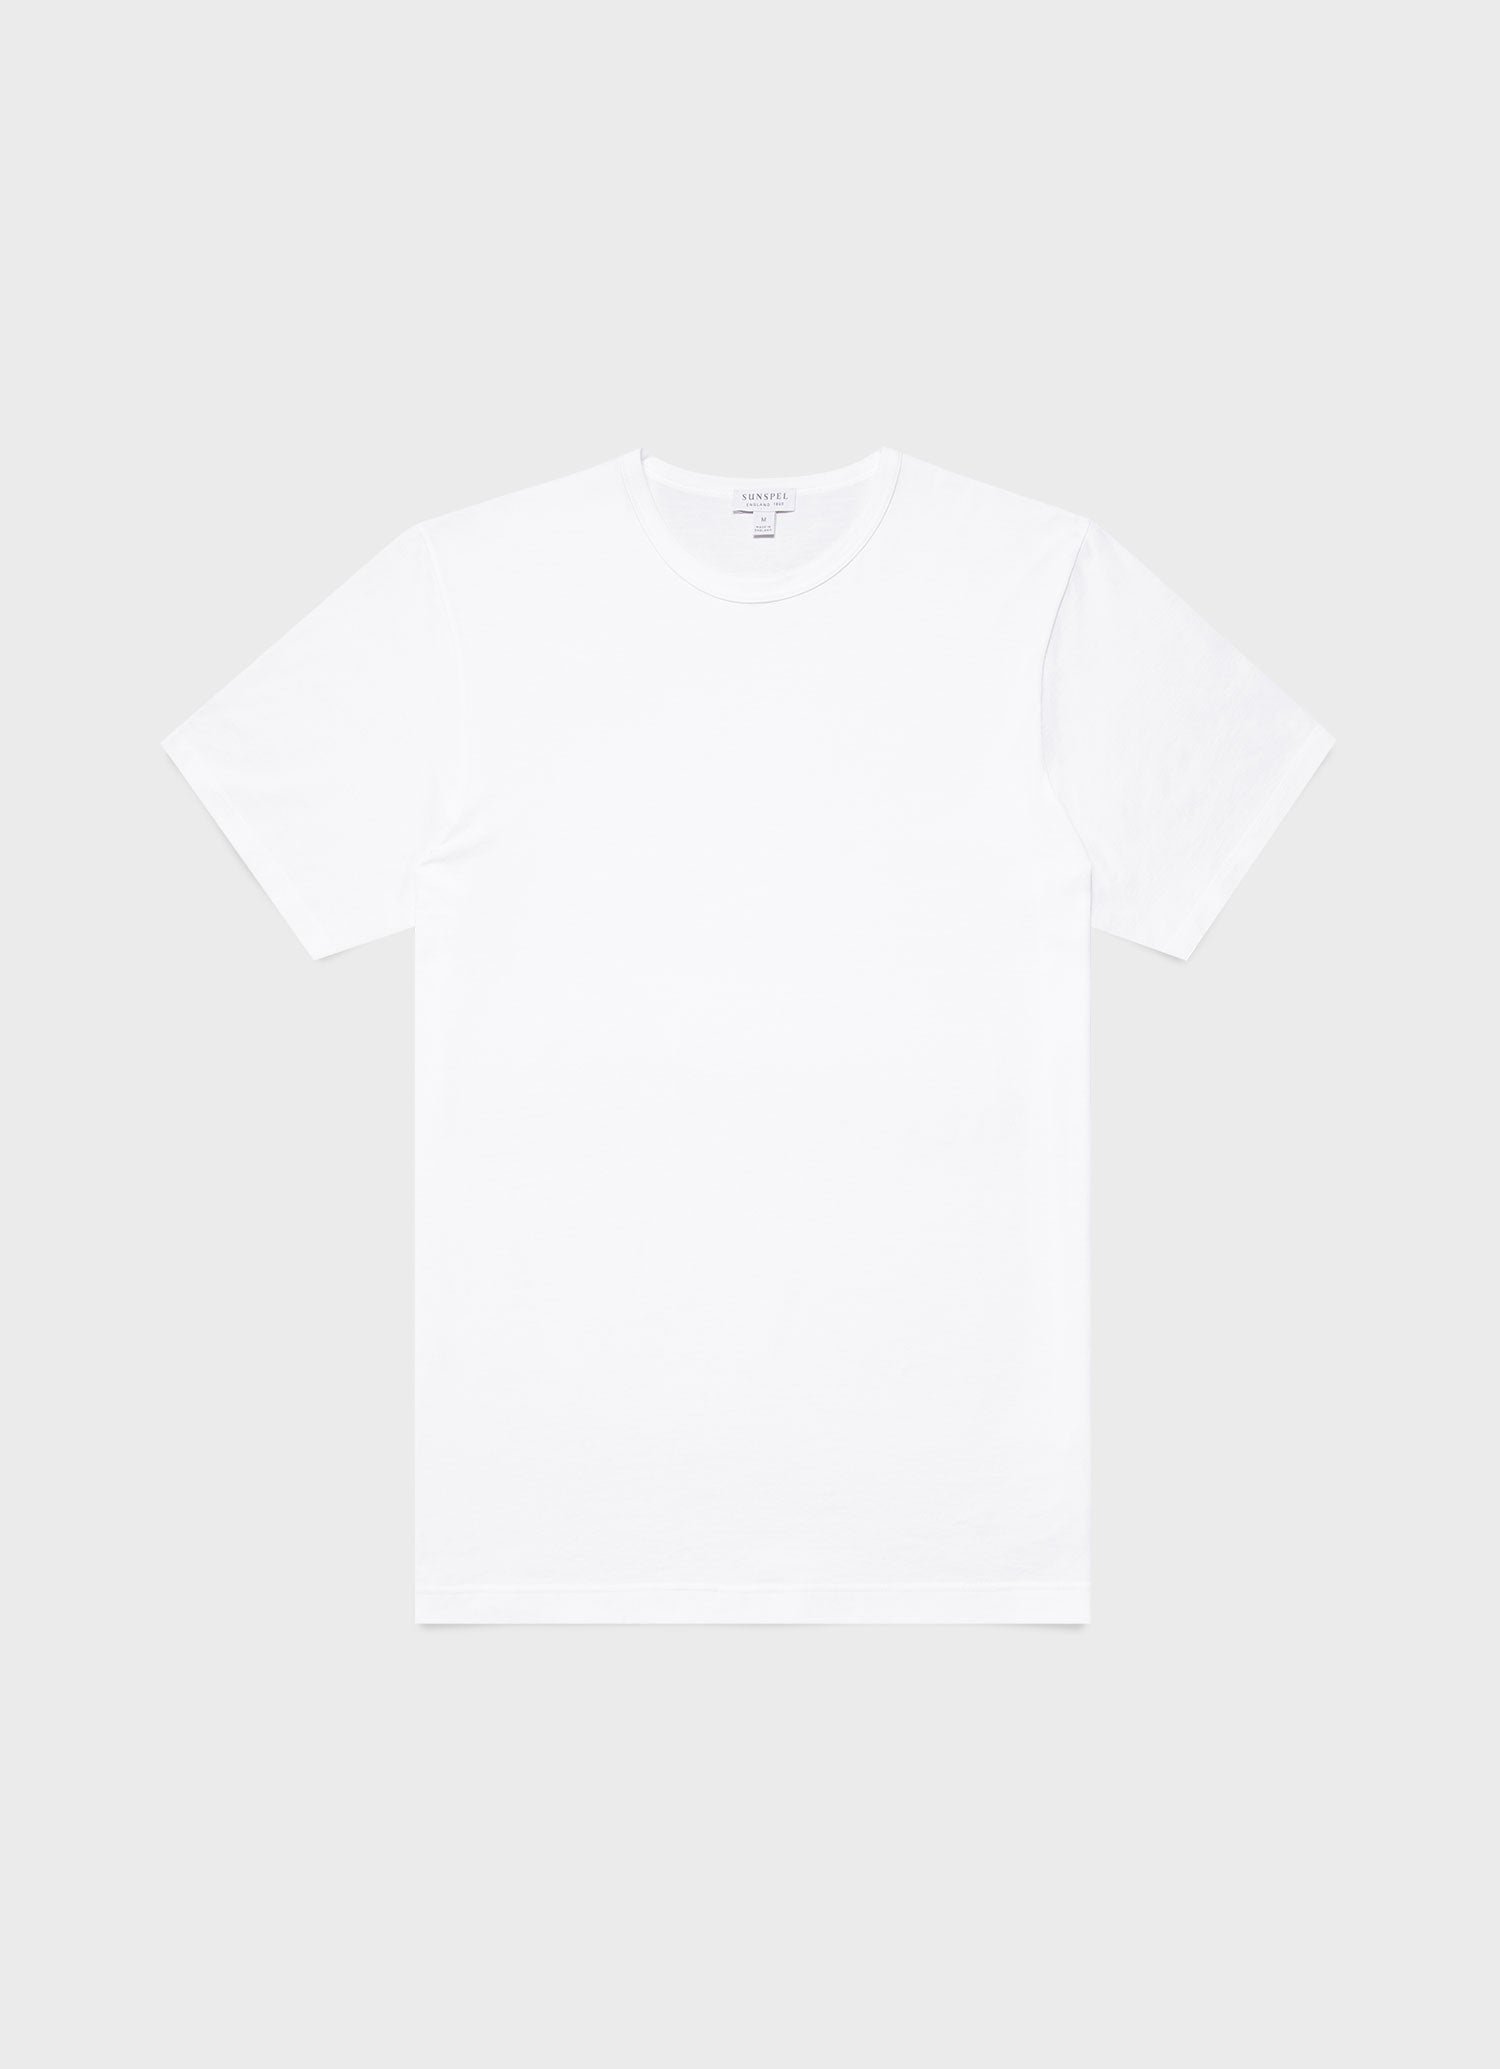 Sunspel classic white T-shirt - £90